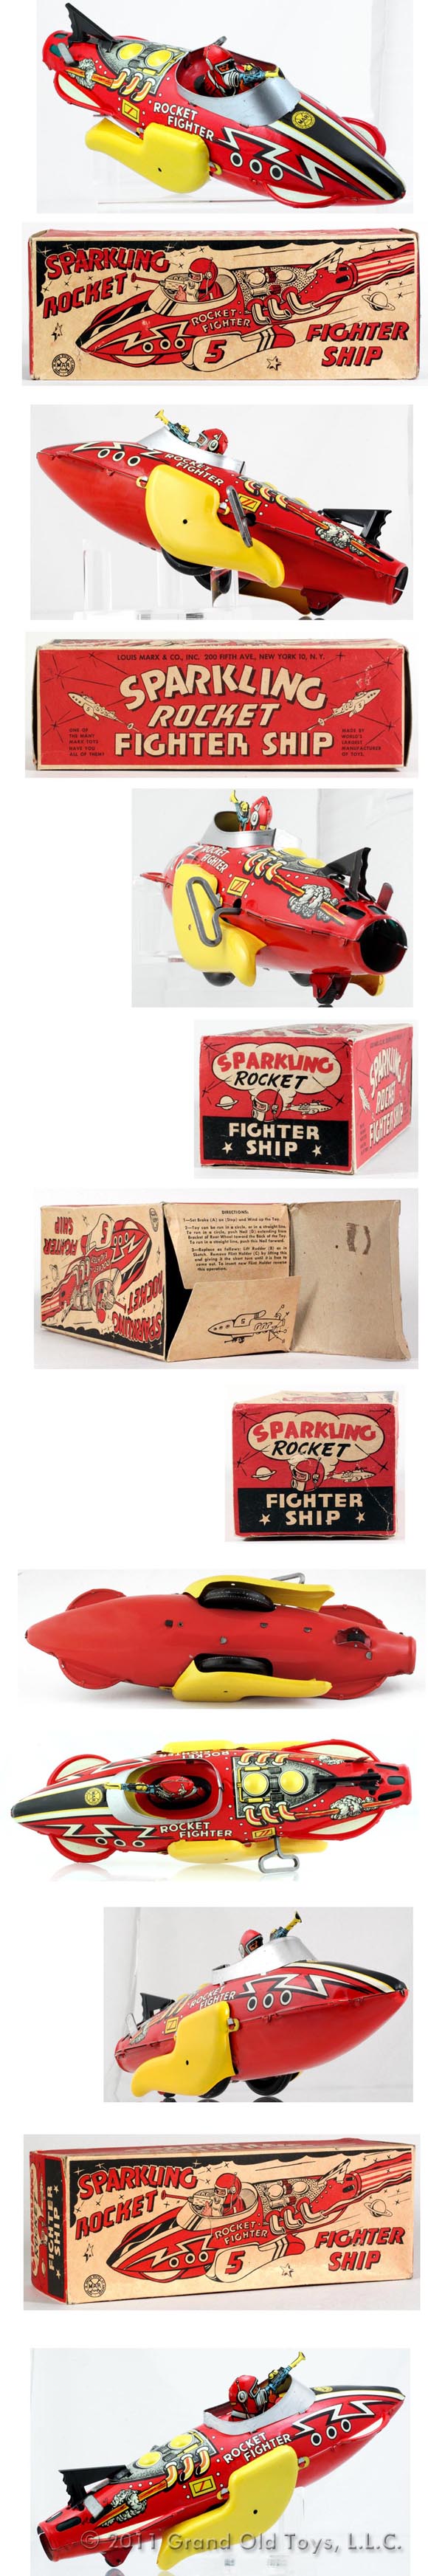 1951 Marx Sparkling Rocket Fighter In Original Box